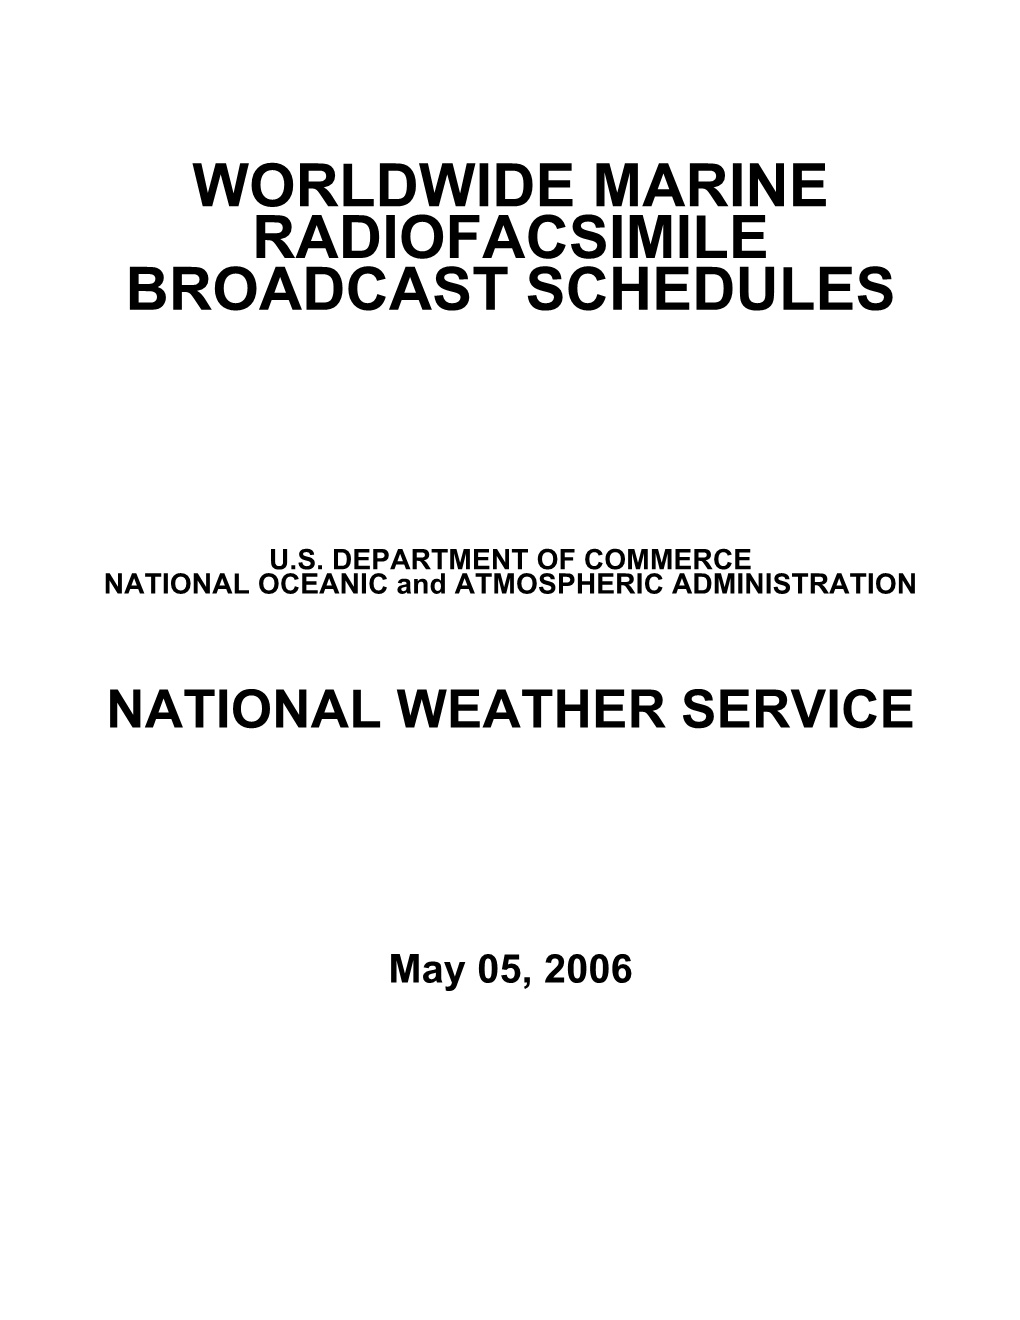 NWS World Wide Marine Chart Broadcasts